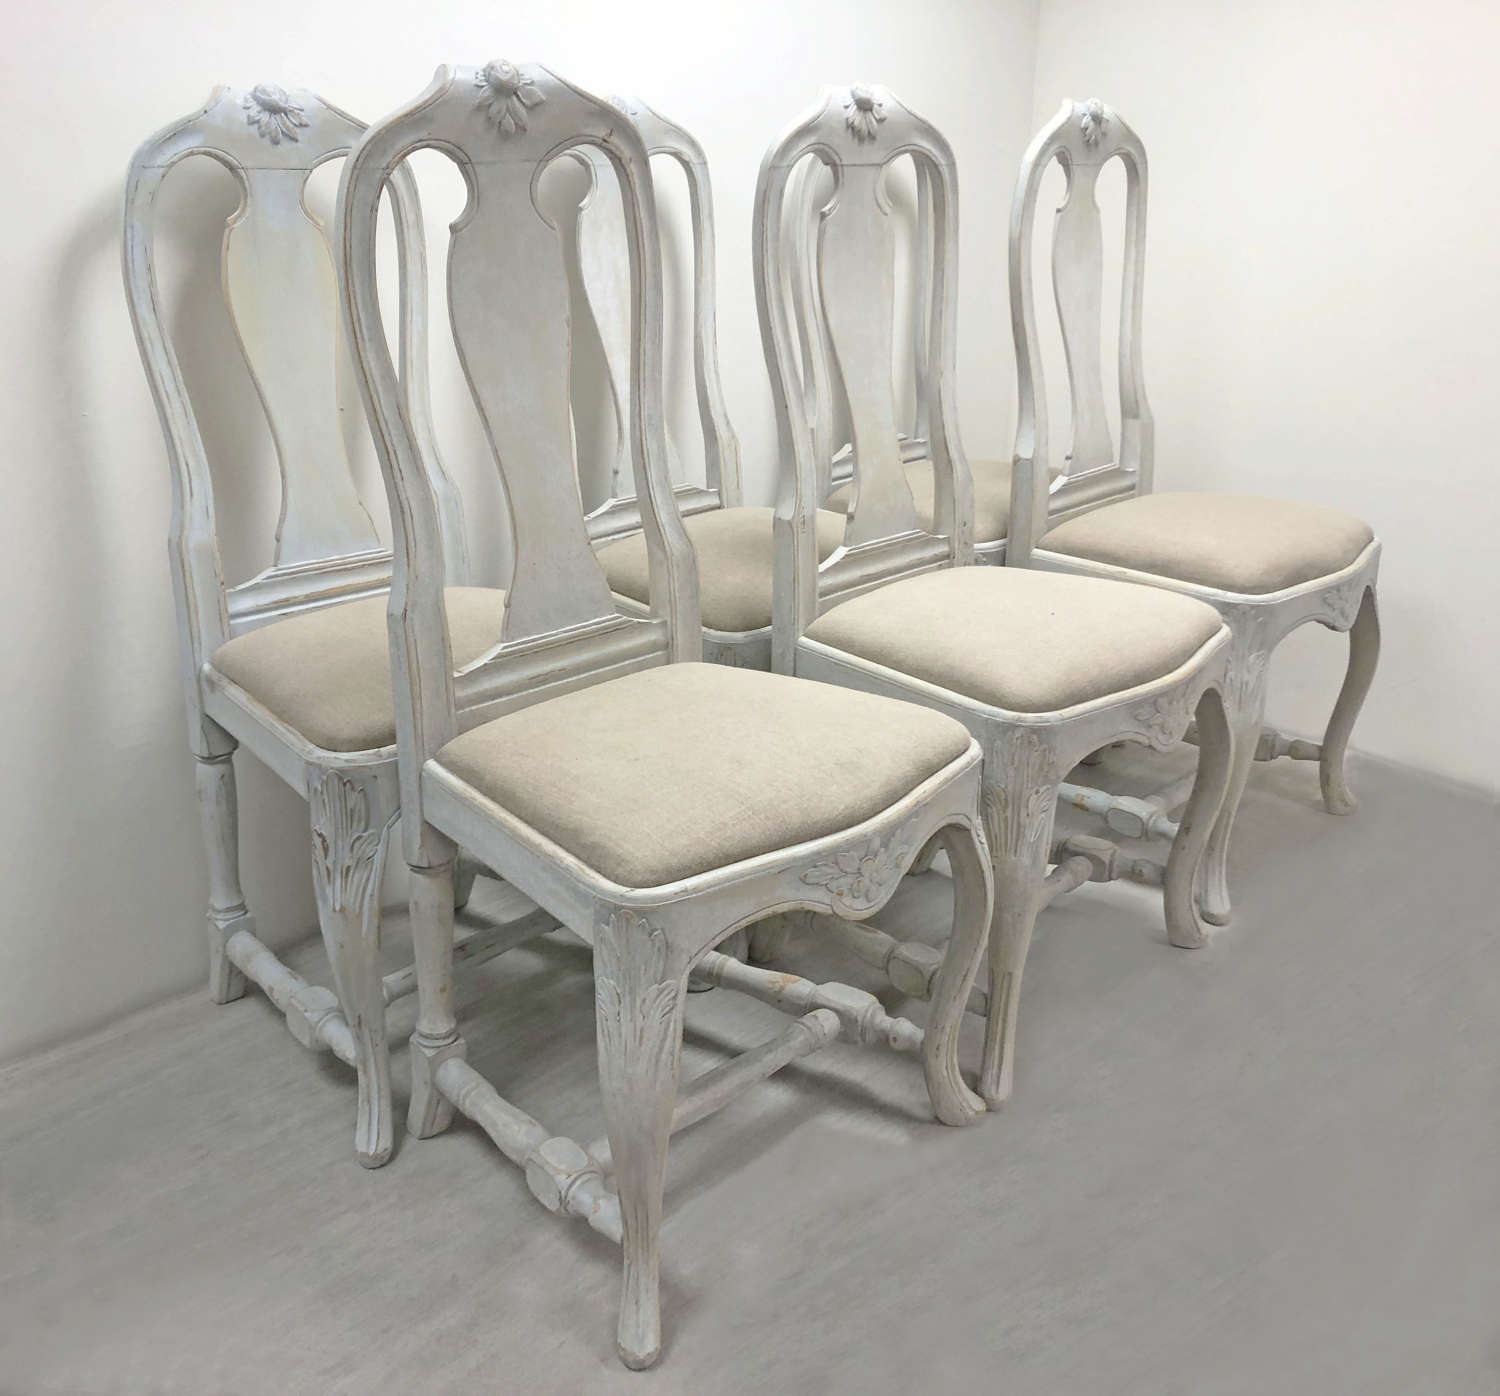 Set 6 19th c Gustavian-style Dining Chairs - circa 1890